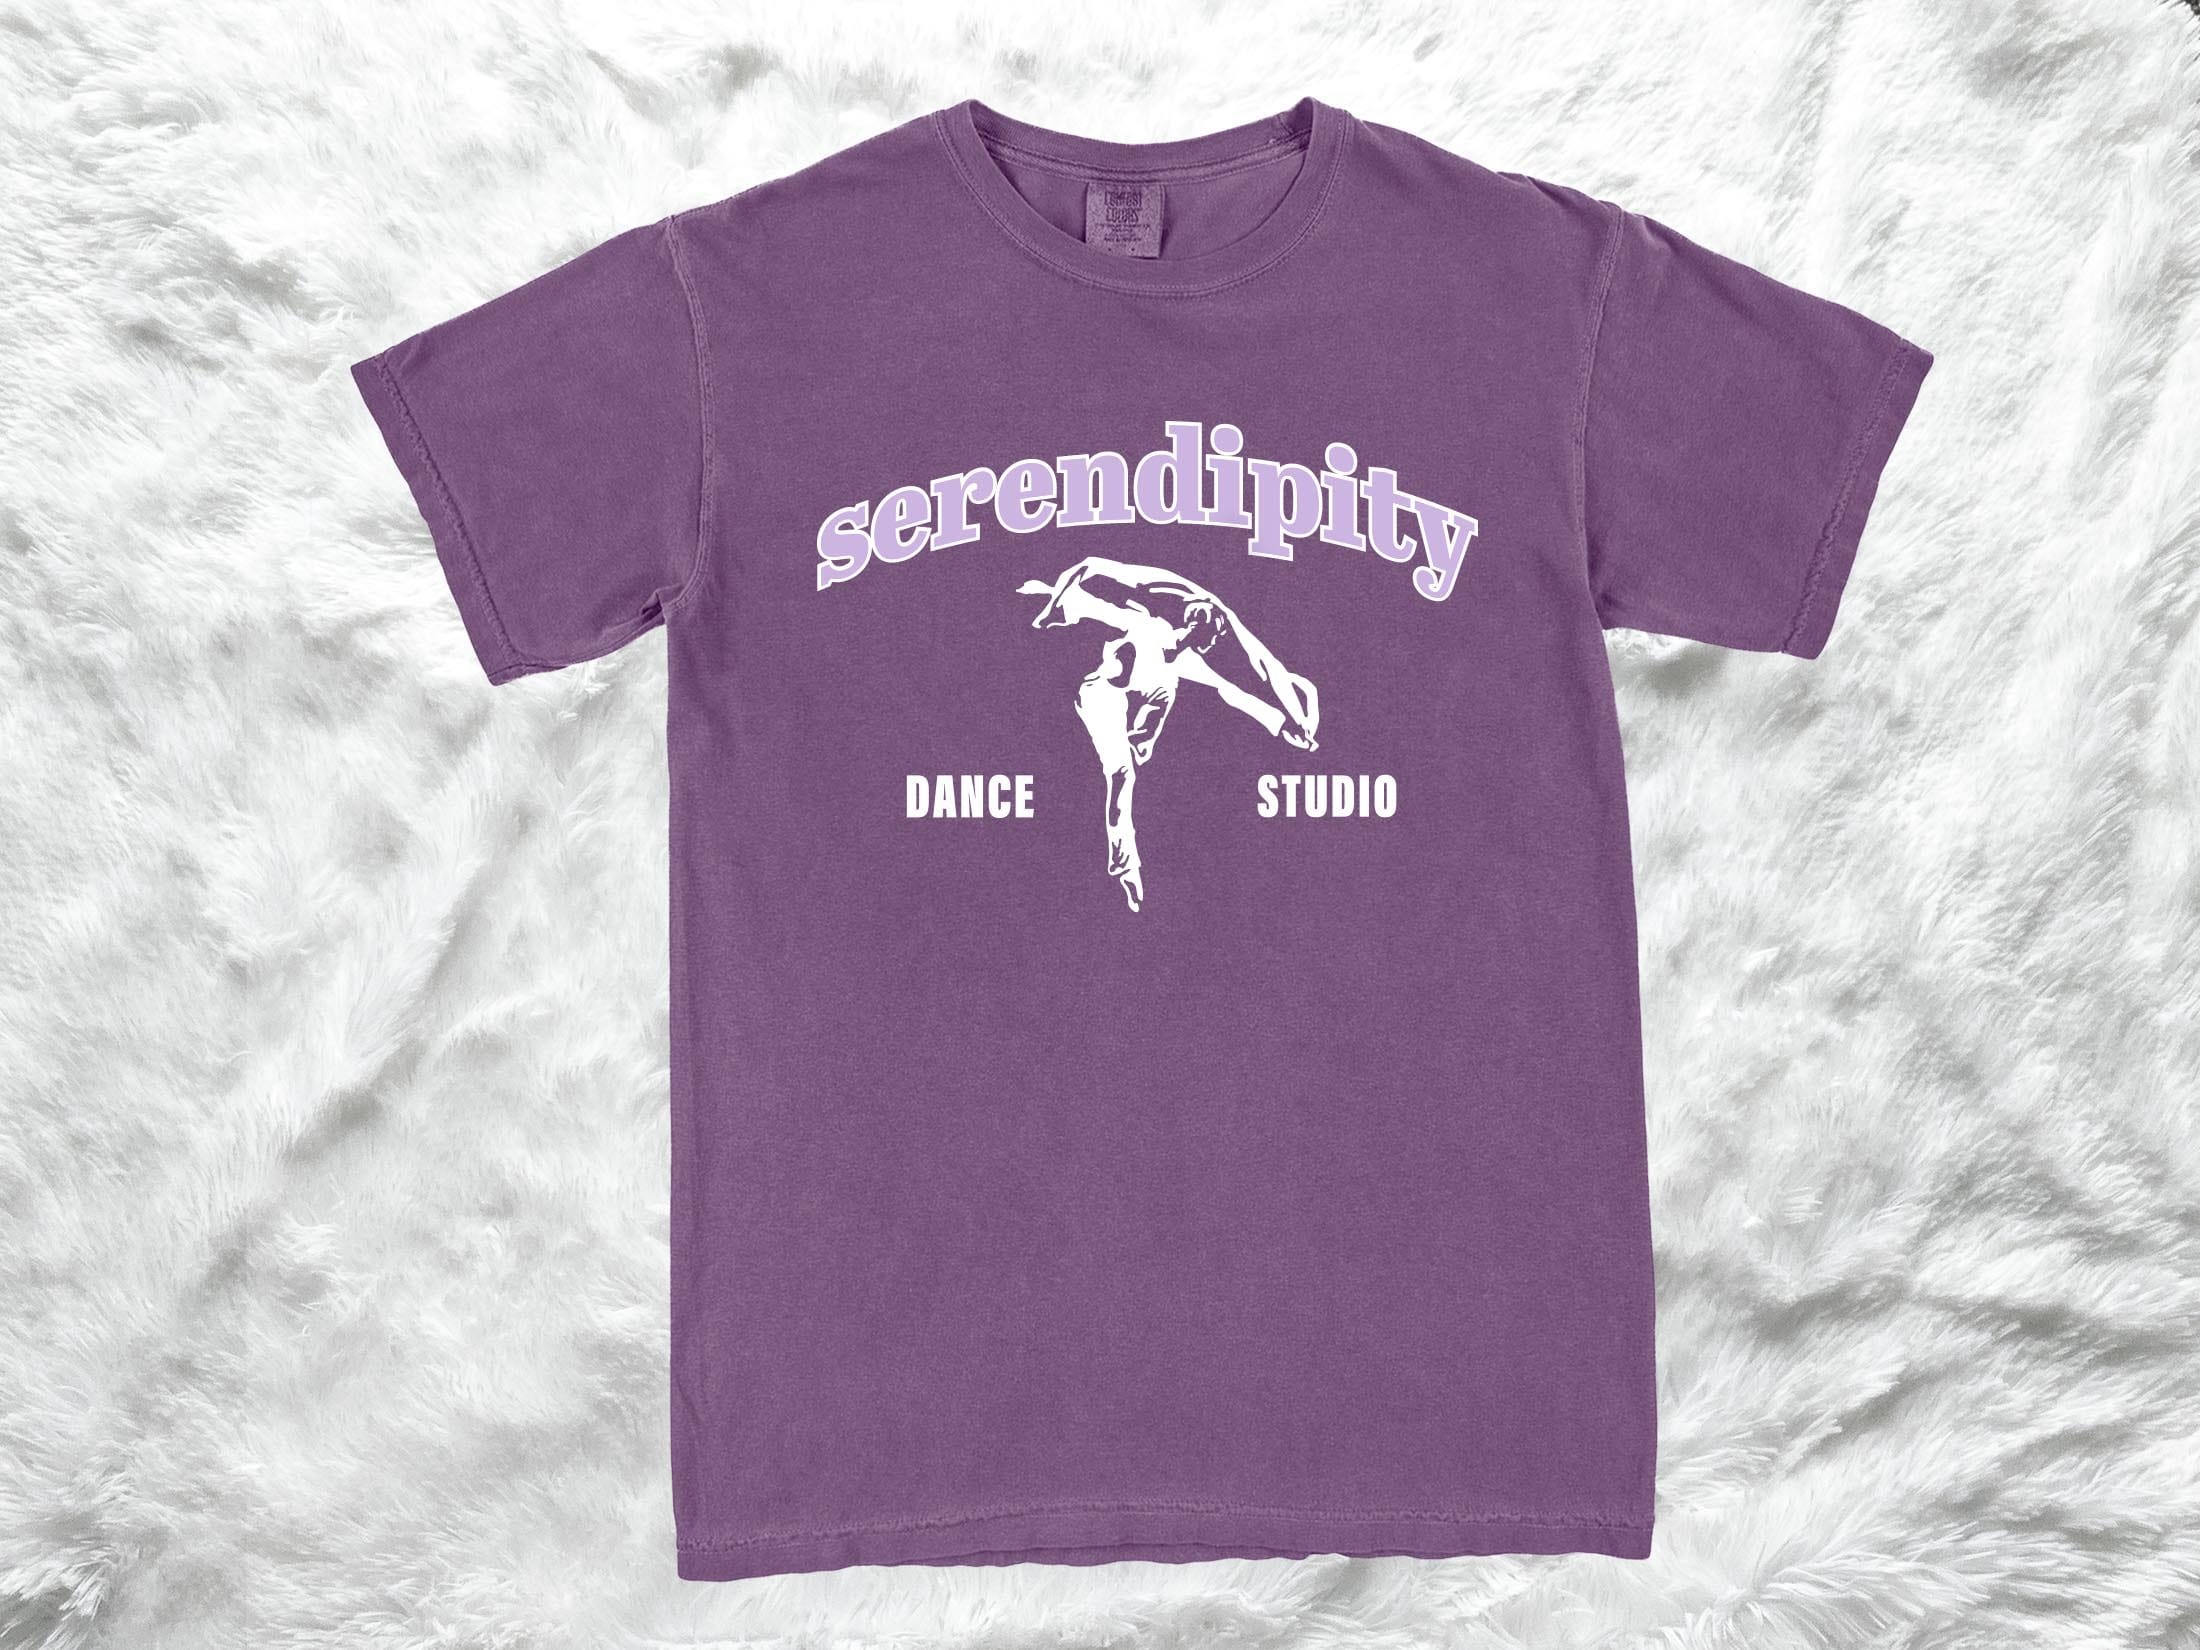 Serendipity Dance Studio Shirts and Sweatshirts